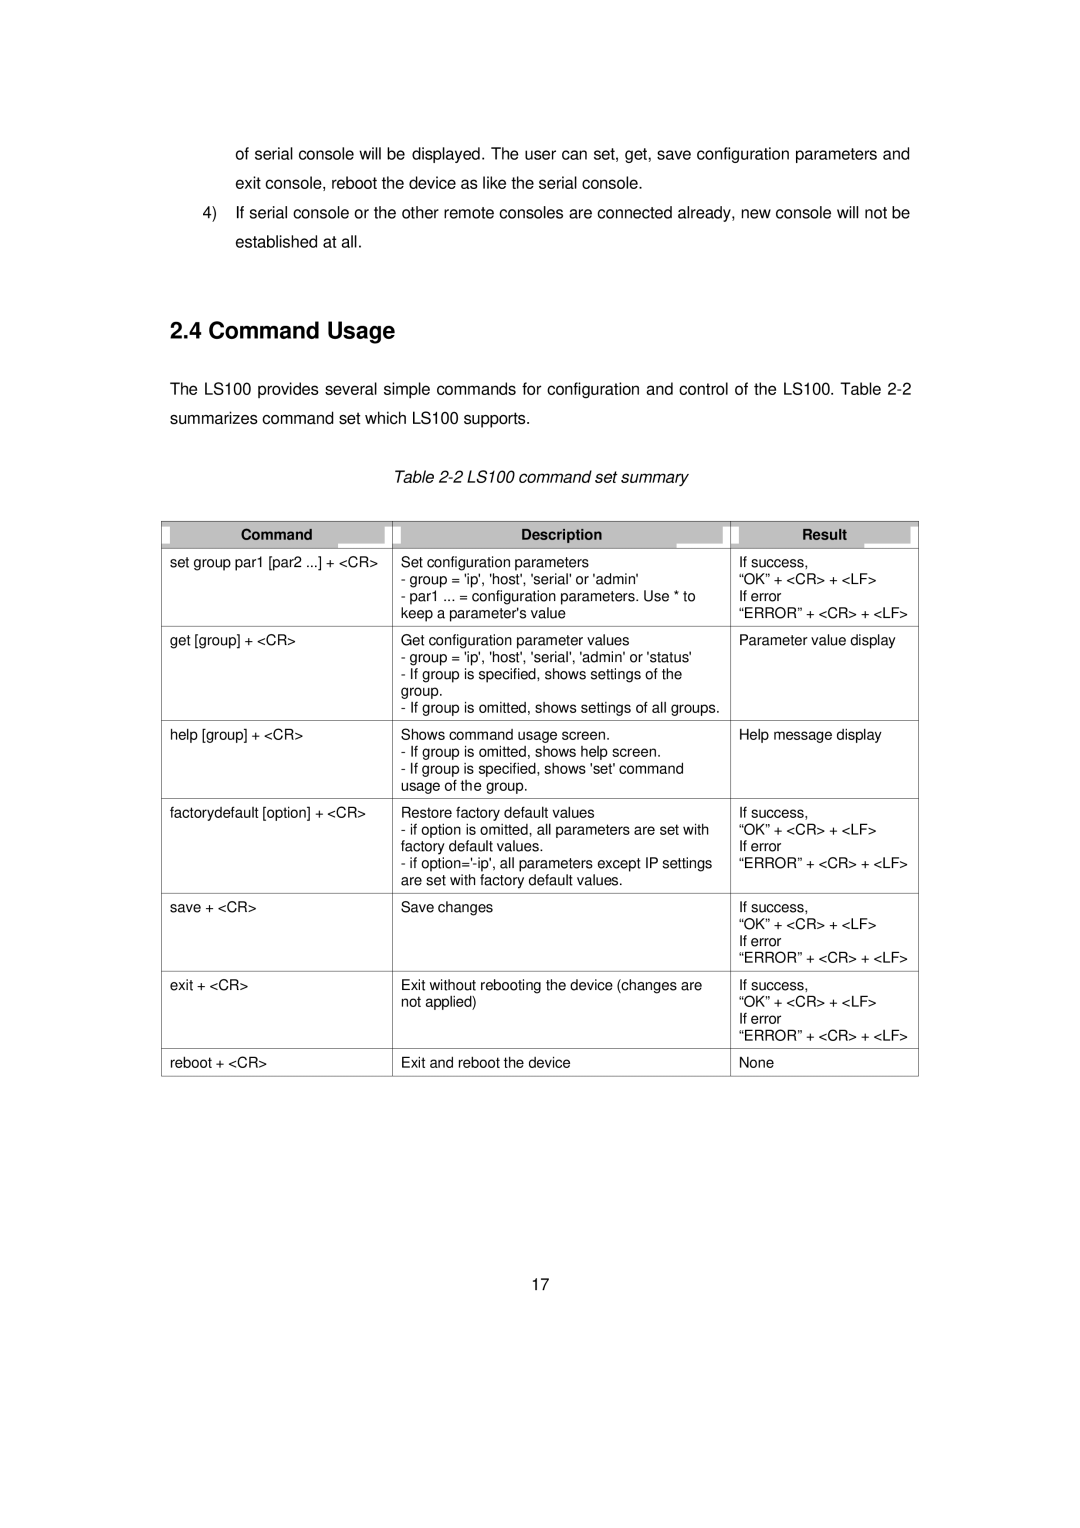 Senatek manual Command Usage, LS100 command set summary 